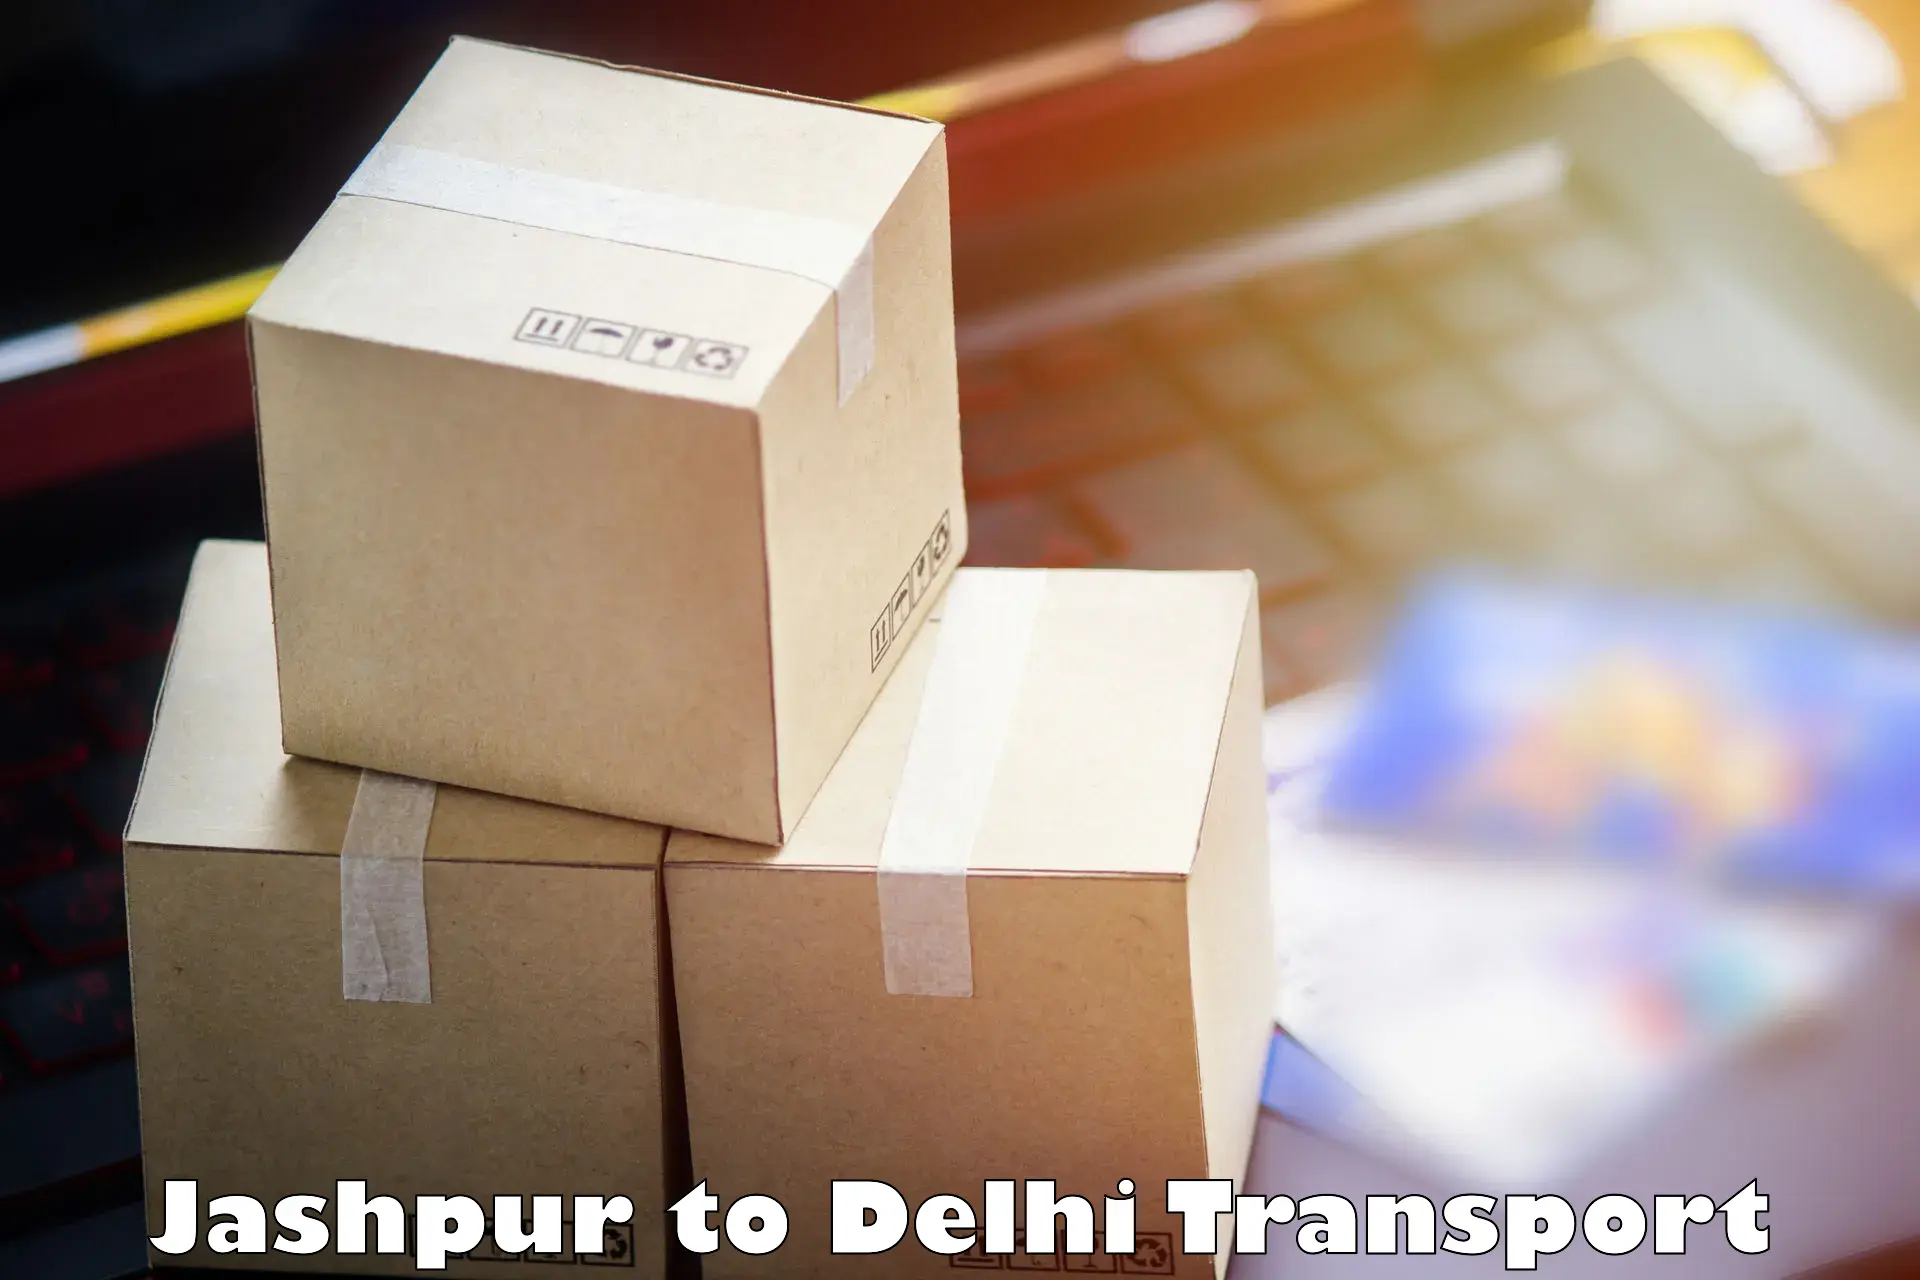 Daily transport service Jashpur to Delhi